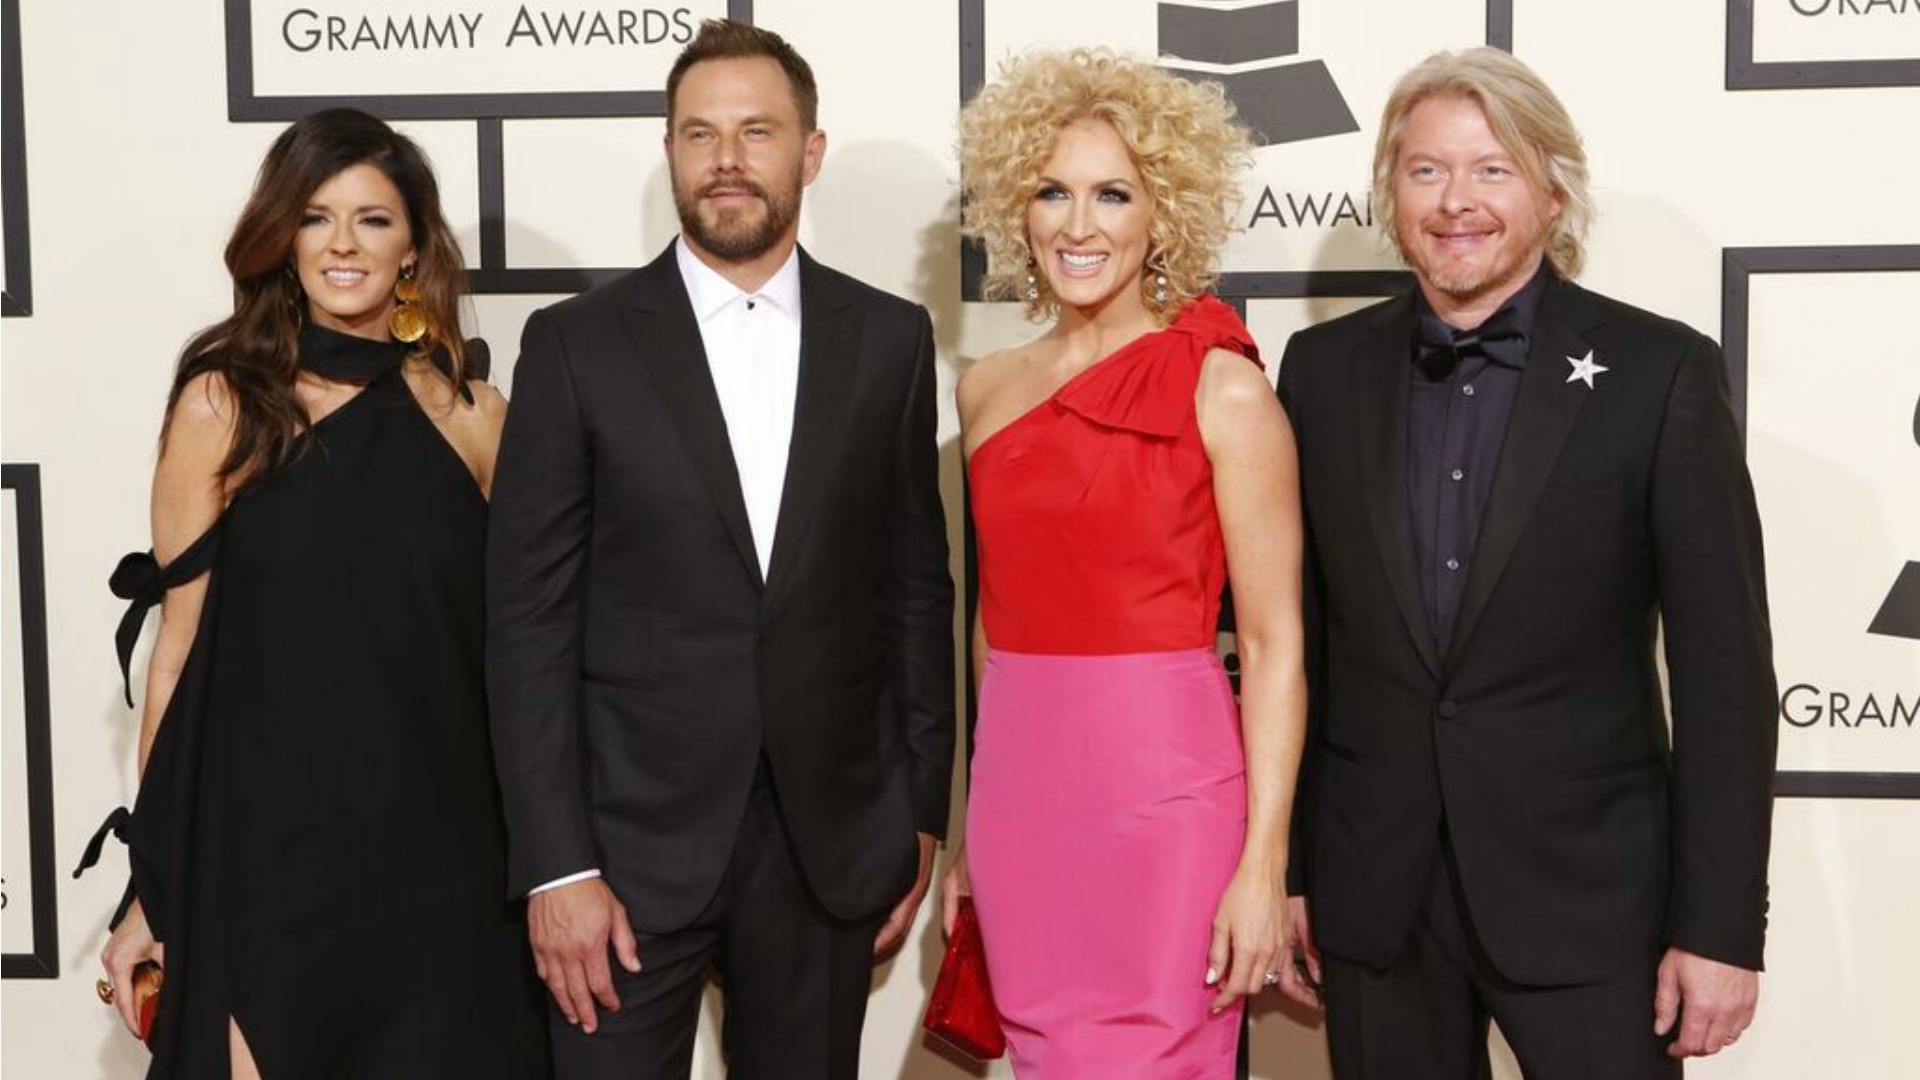 Country Stars Shine At 2016 GRAMMY Awards - GRAMMY Awards Photos - CBS.com1920 x 1080